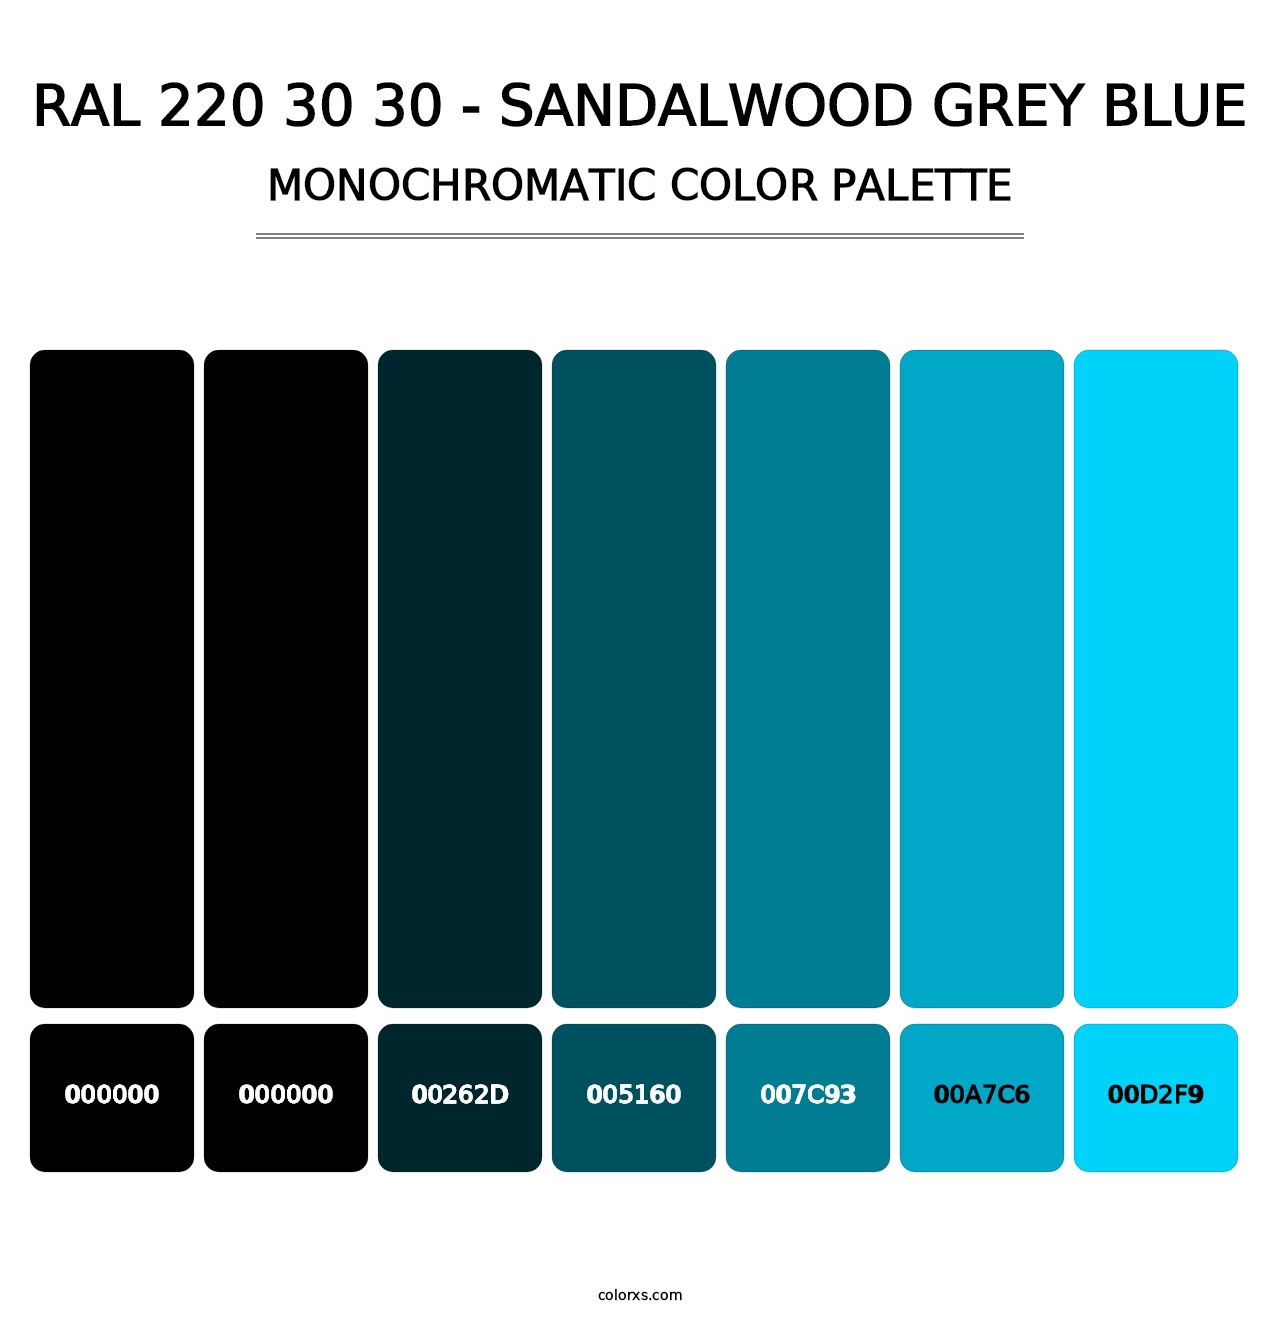 RAL 220 30 30 - Sandalwood Grey Blue - Monochromatic Color Palette